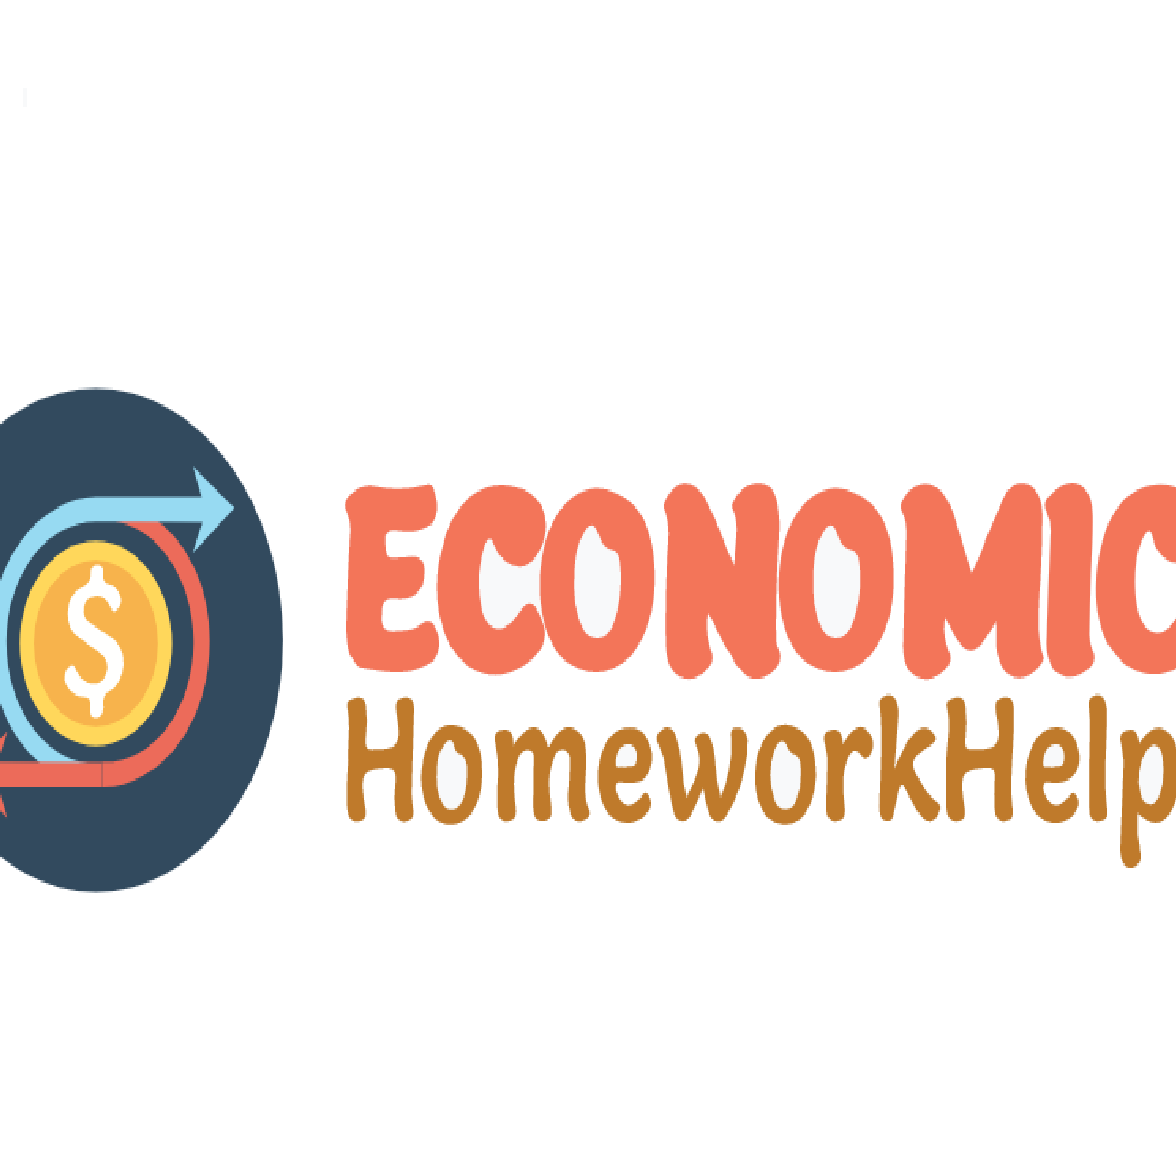 Economics Homework Helper